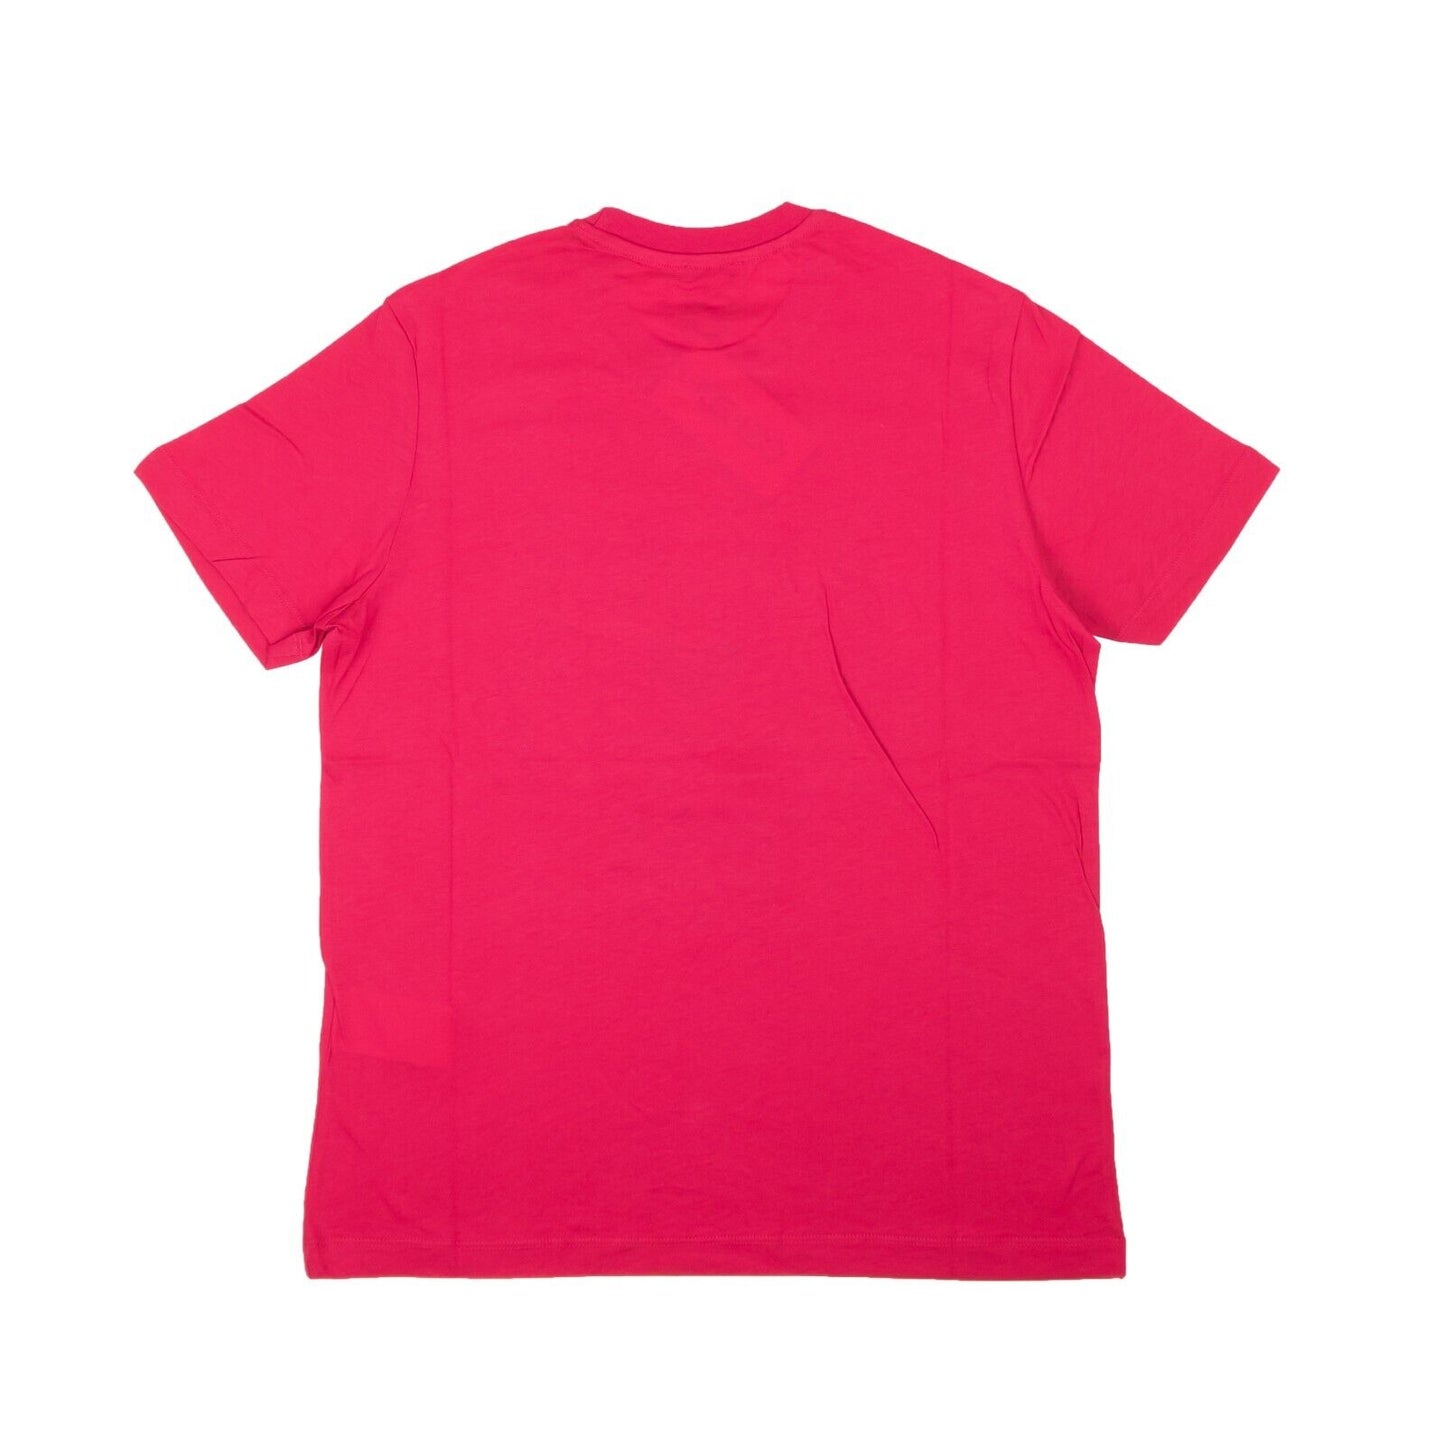 Kenzo Classic Tiger T-Shirt - Pink